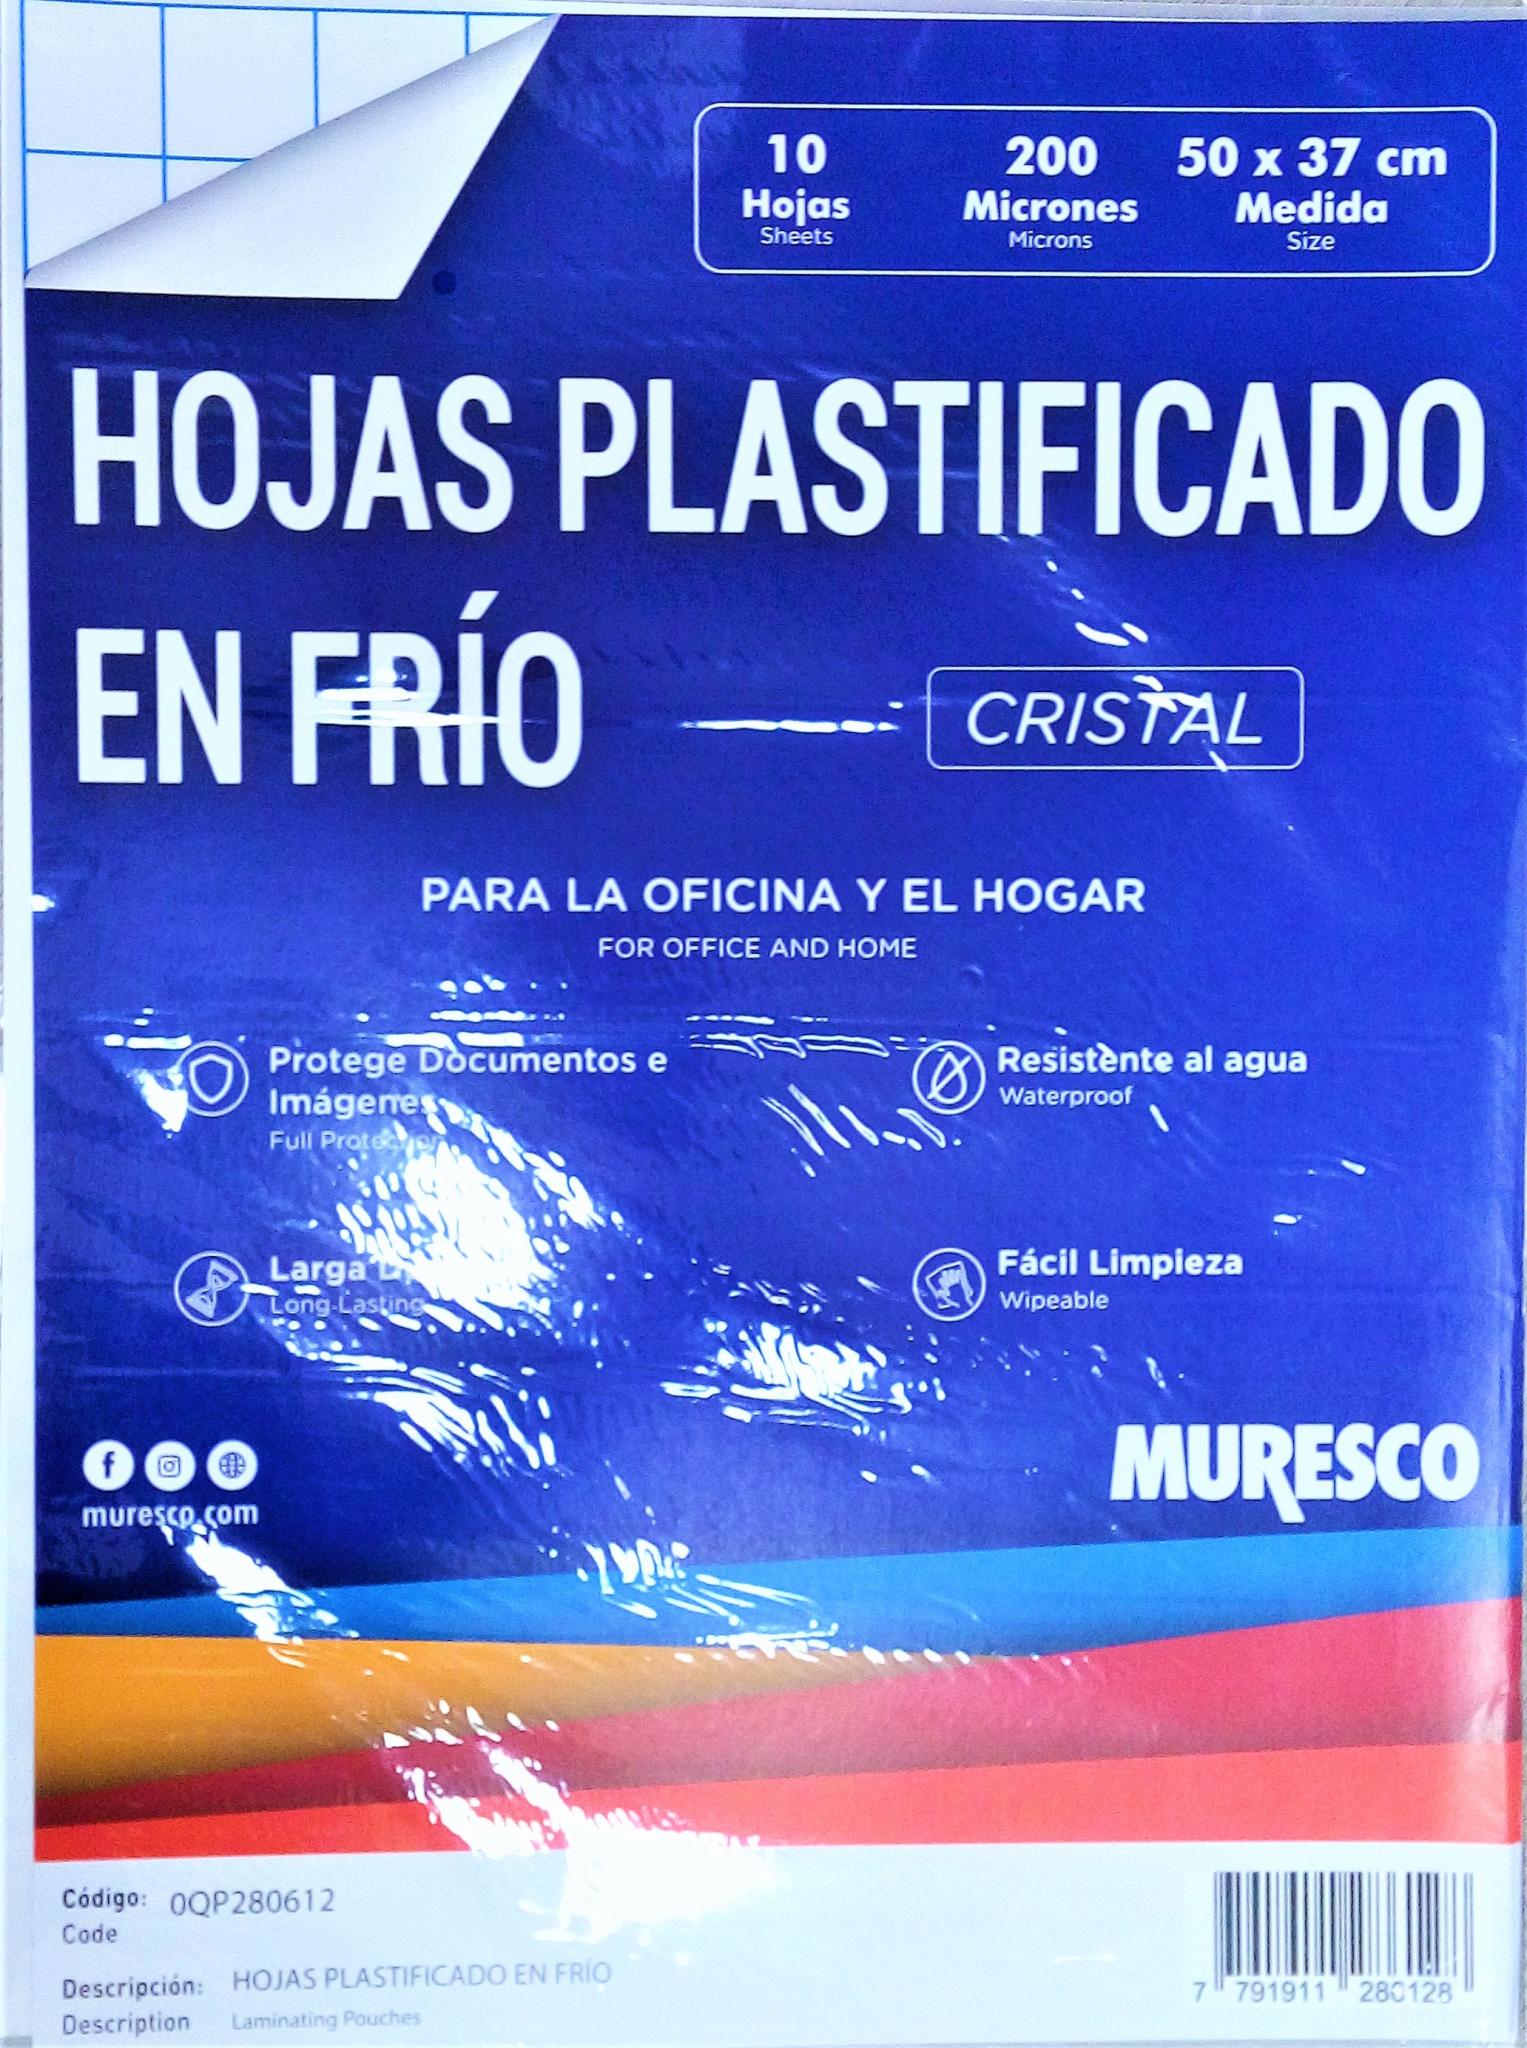 PLANCHA P/PLASTIFICAR 50 X 37 CM X 10 UN 200 MIC- MURESCO